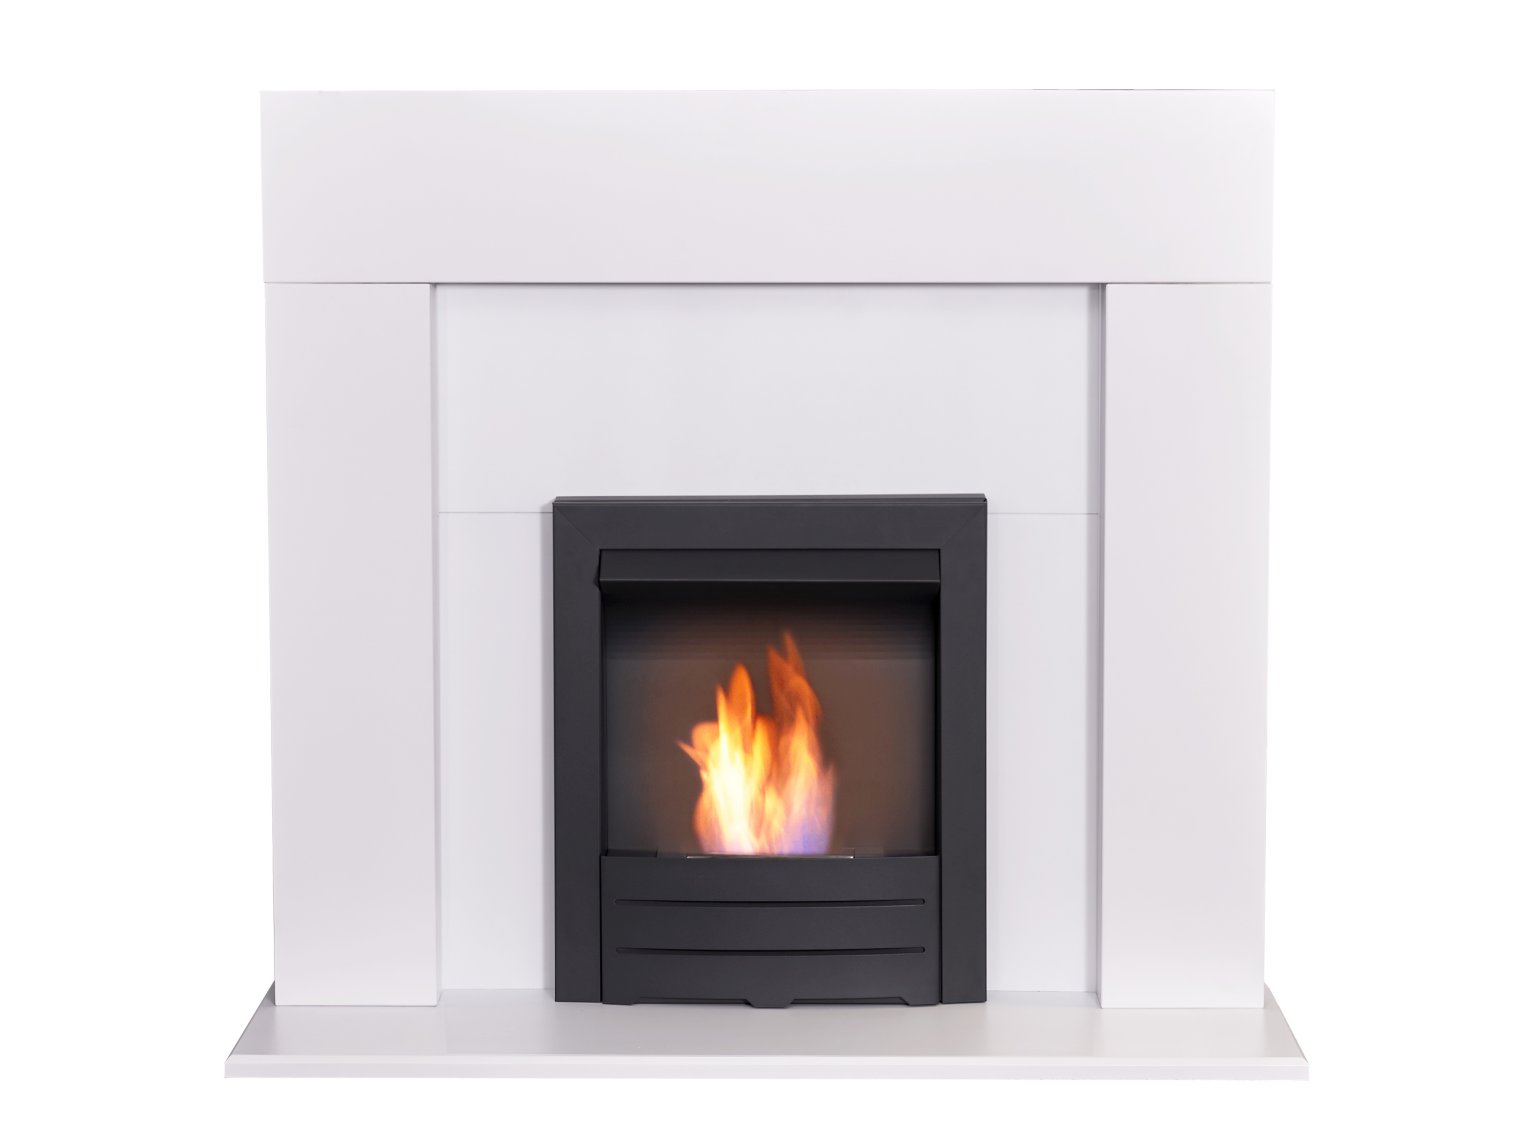 Adam Miami Fireplace in Pure White with Colorado Bio Ethanol Fire in Black, 48 Inch